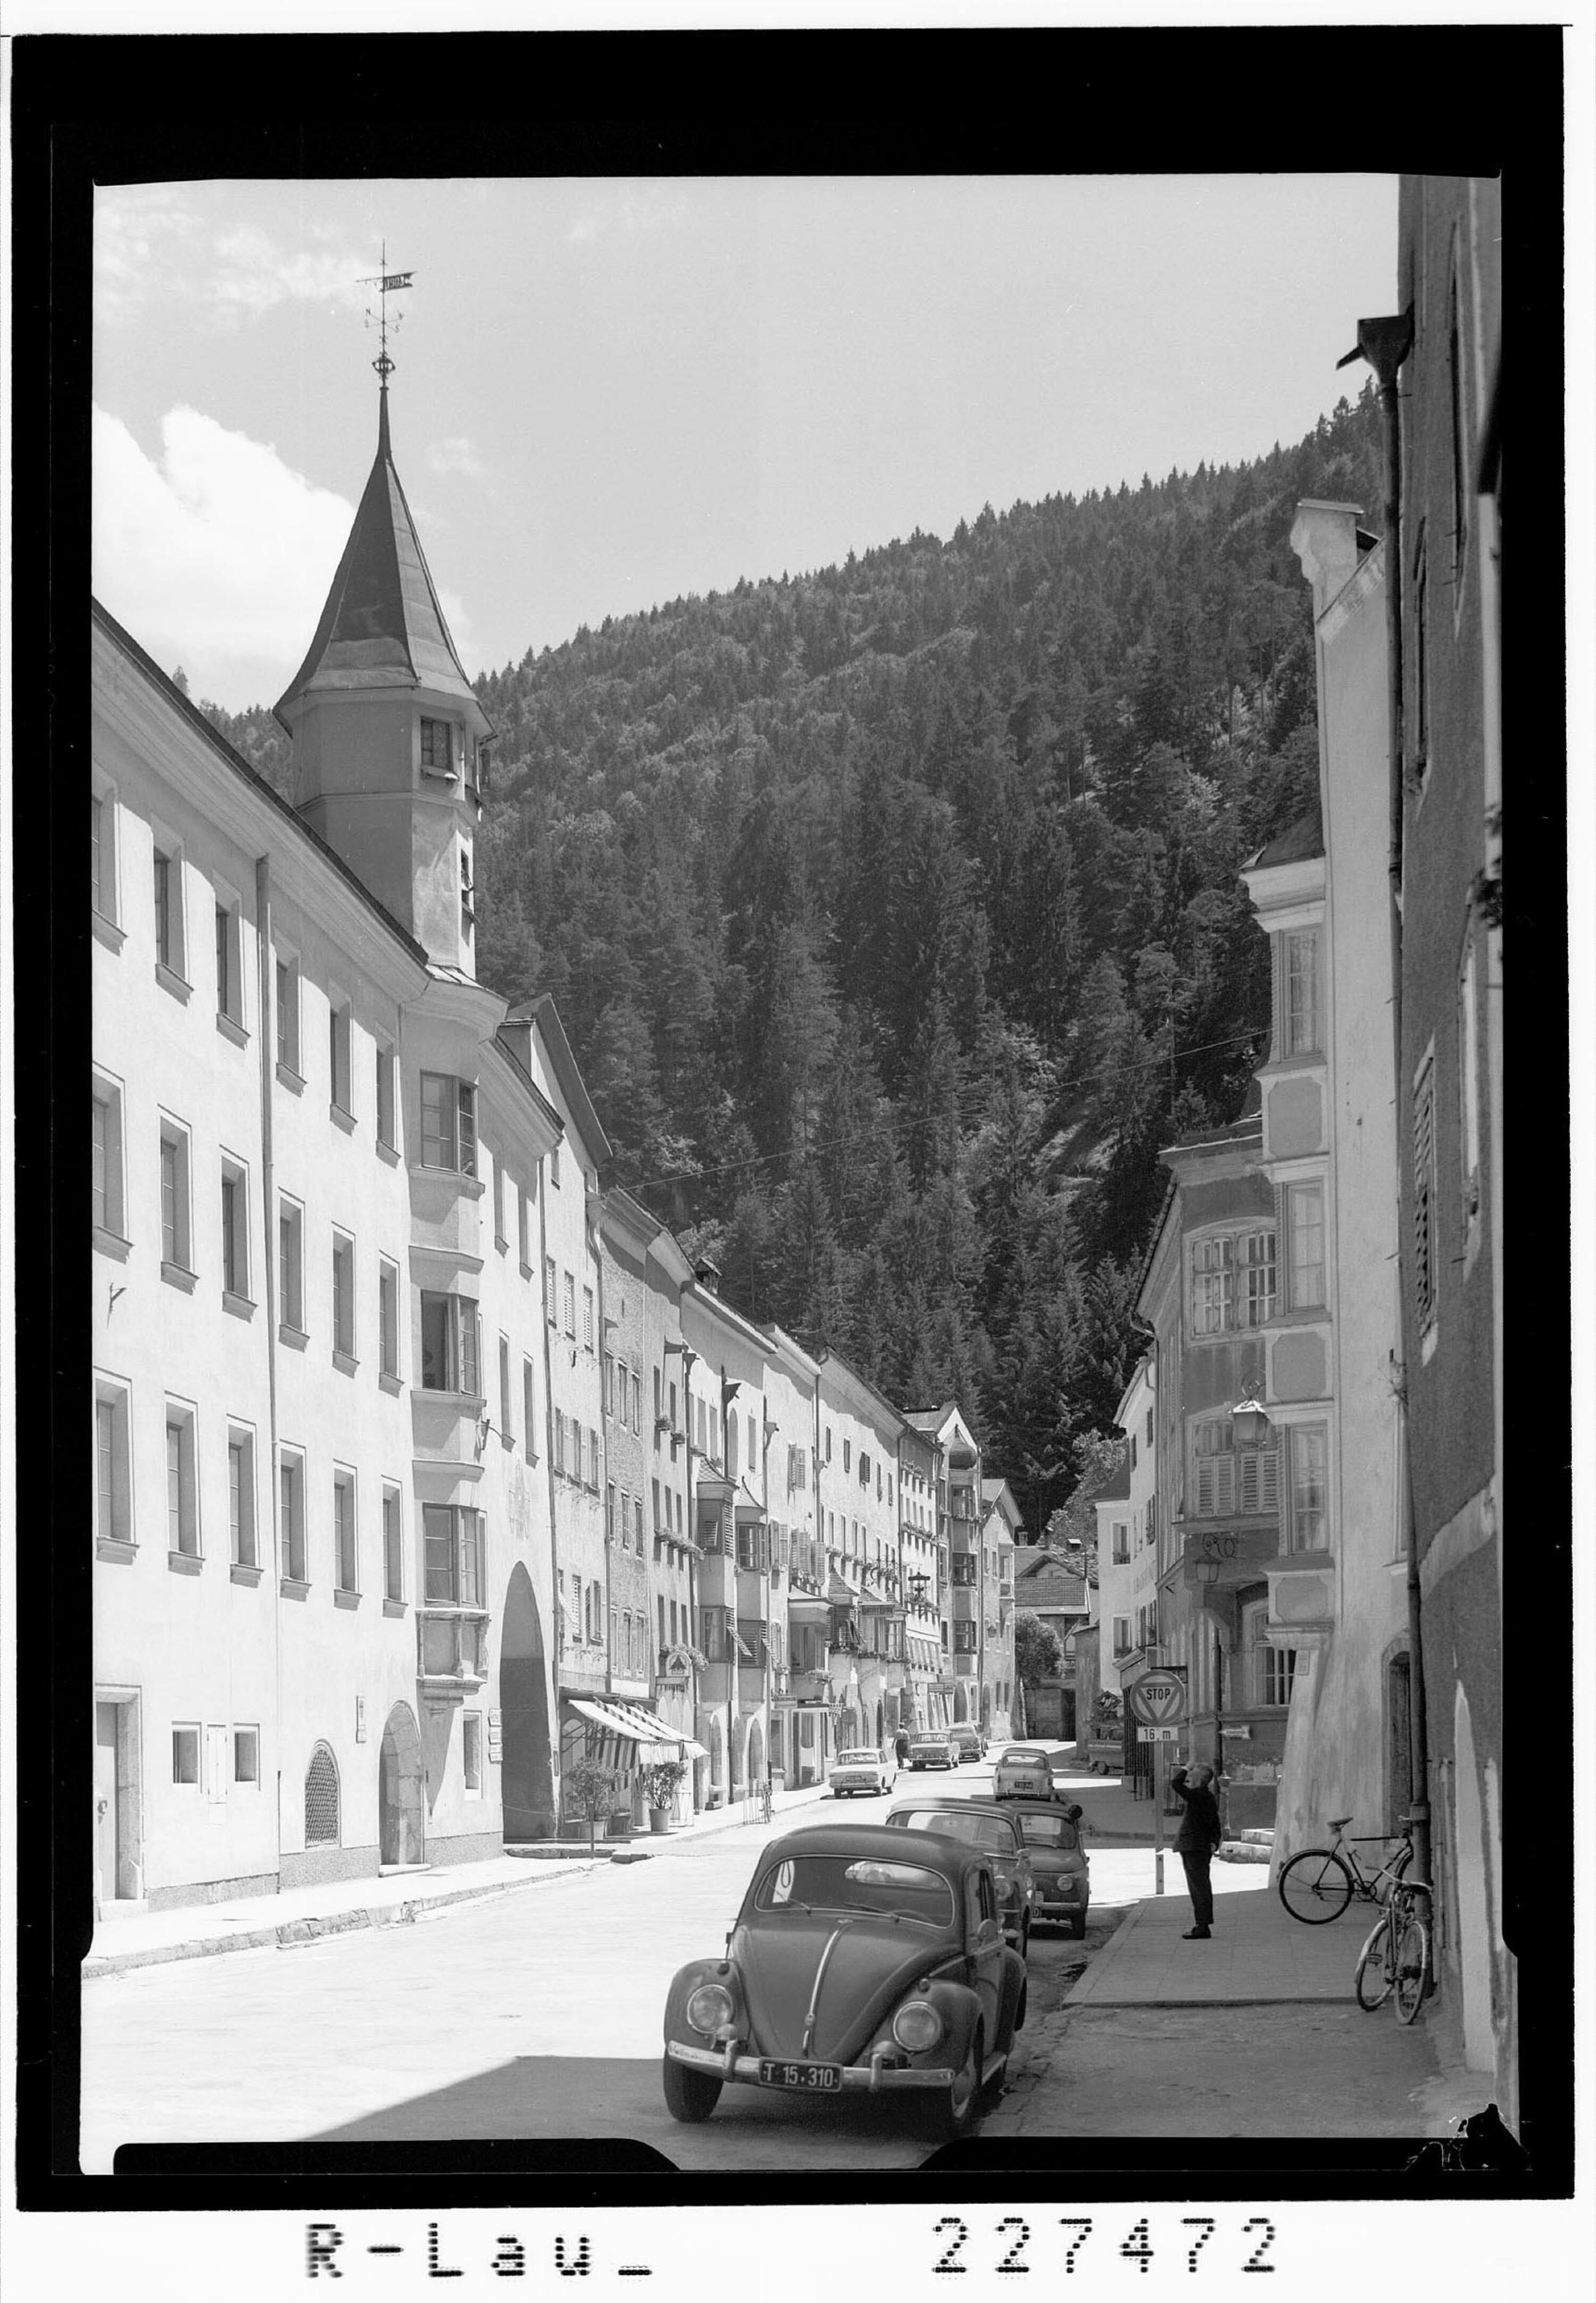 [Kanzler Biener Strasse in Rattenberg / Tirol]></div>


    <hr>
    <div class=